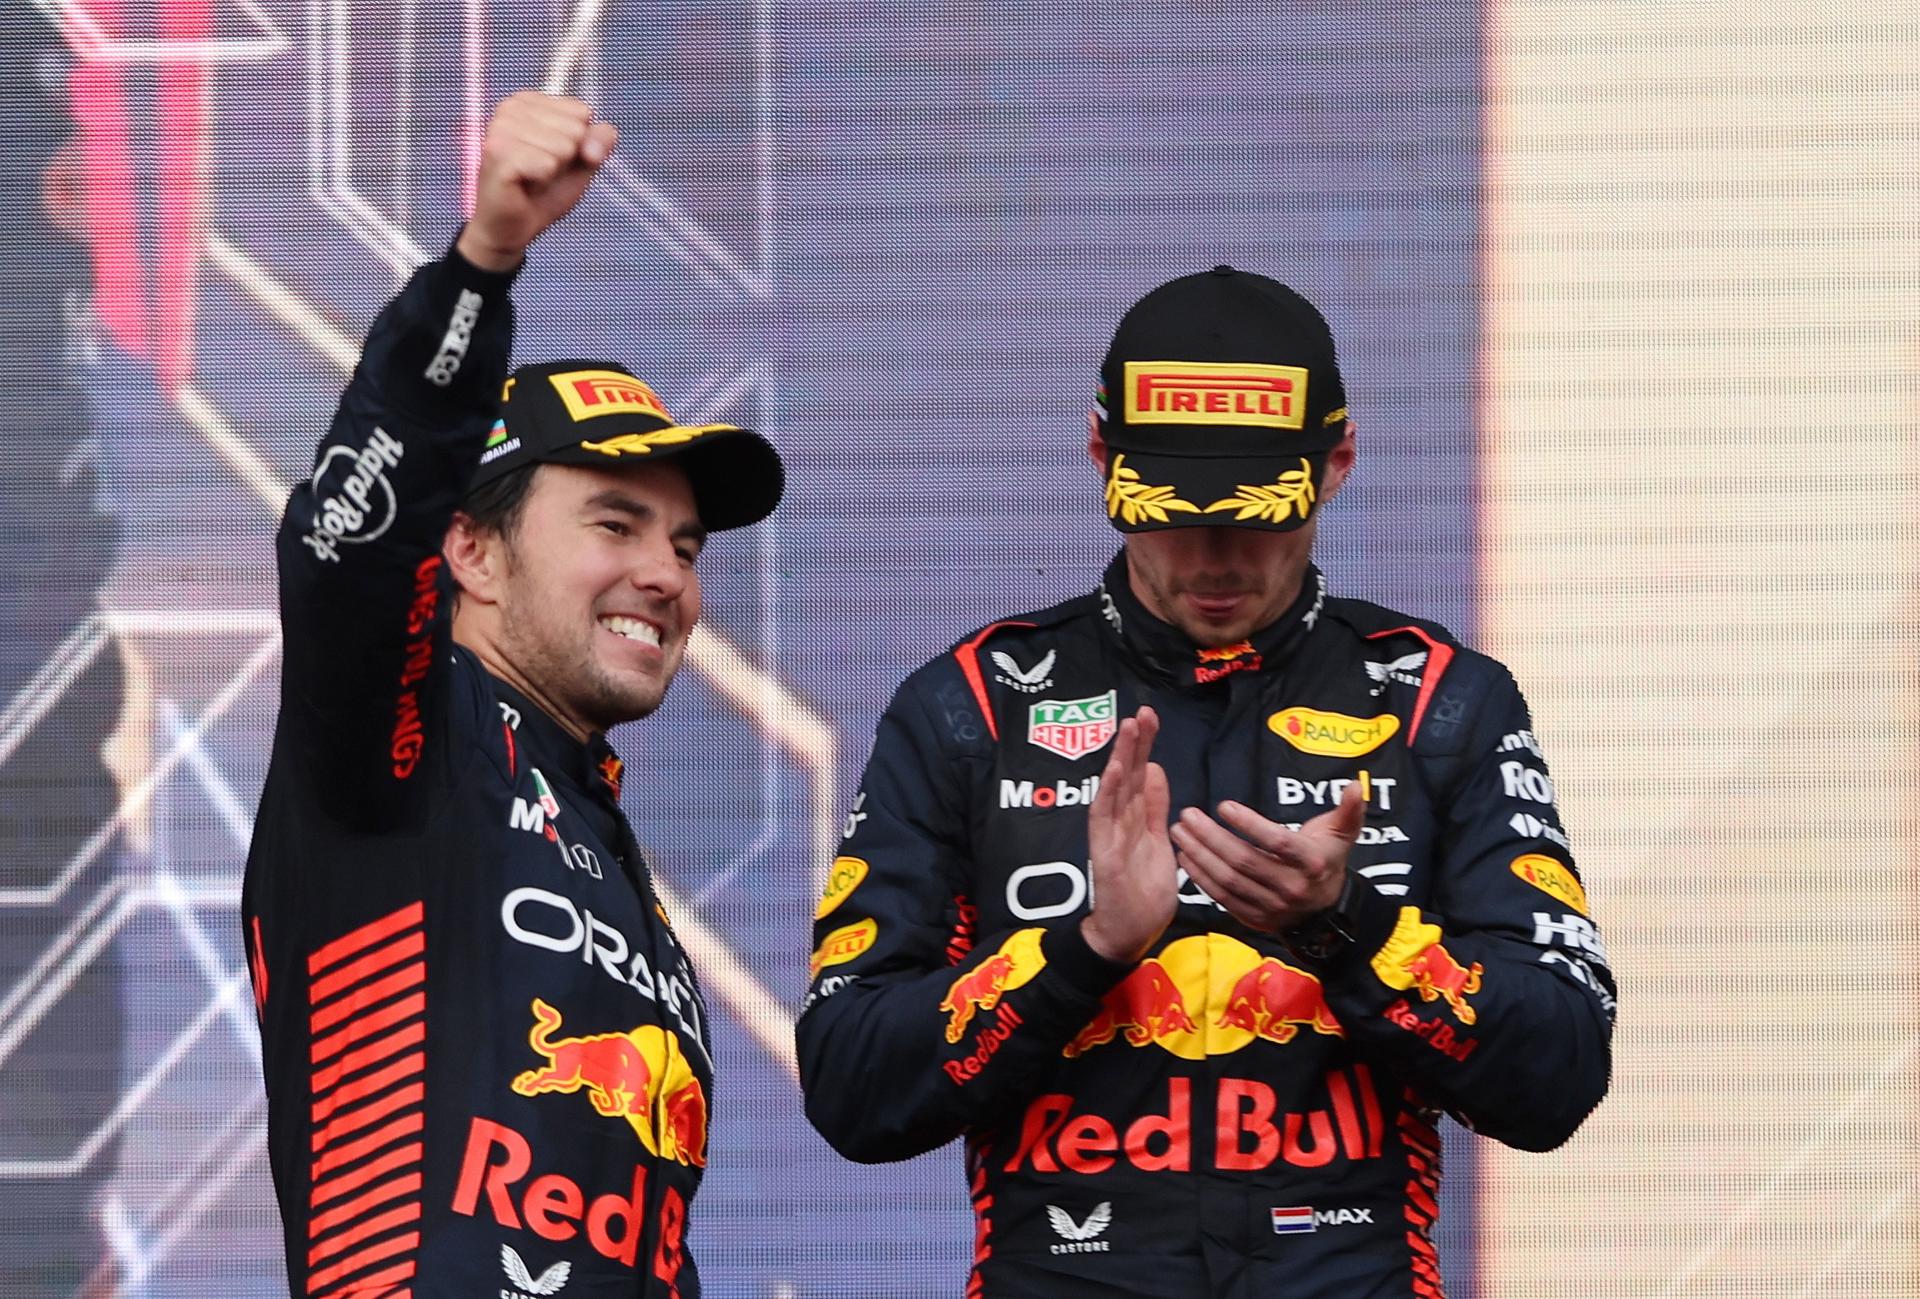 2 finalistes al càsting final de Red Bull per fer fora Checo Pérez